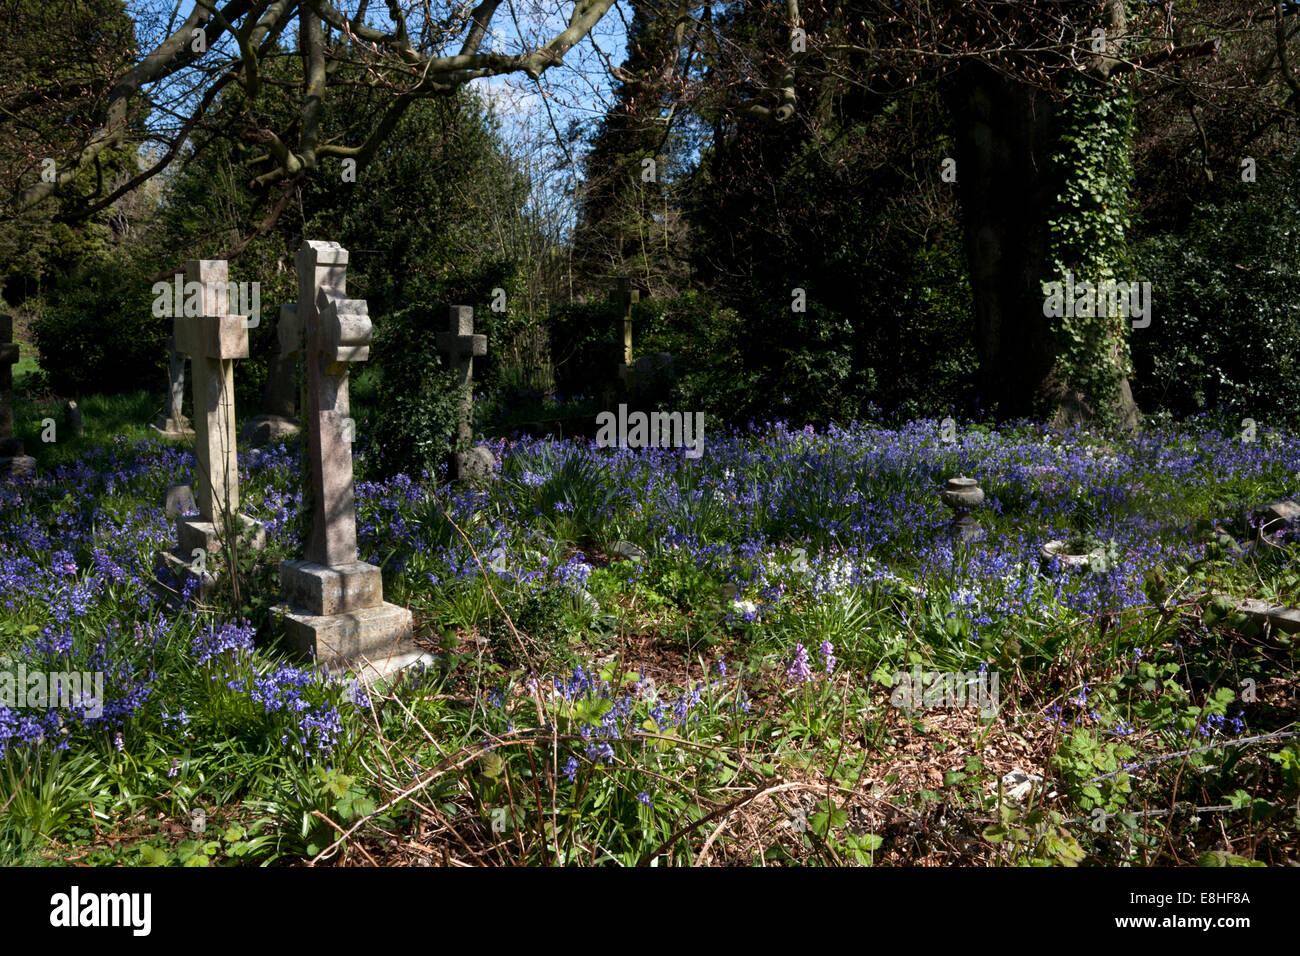 gravestones old cemetery southampton common hampshire england Stock Photo